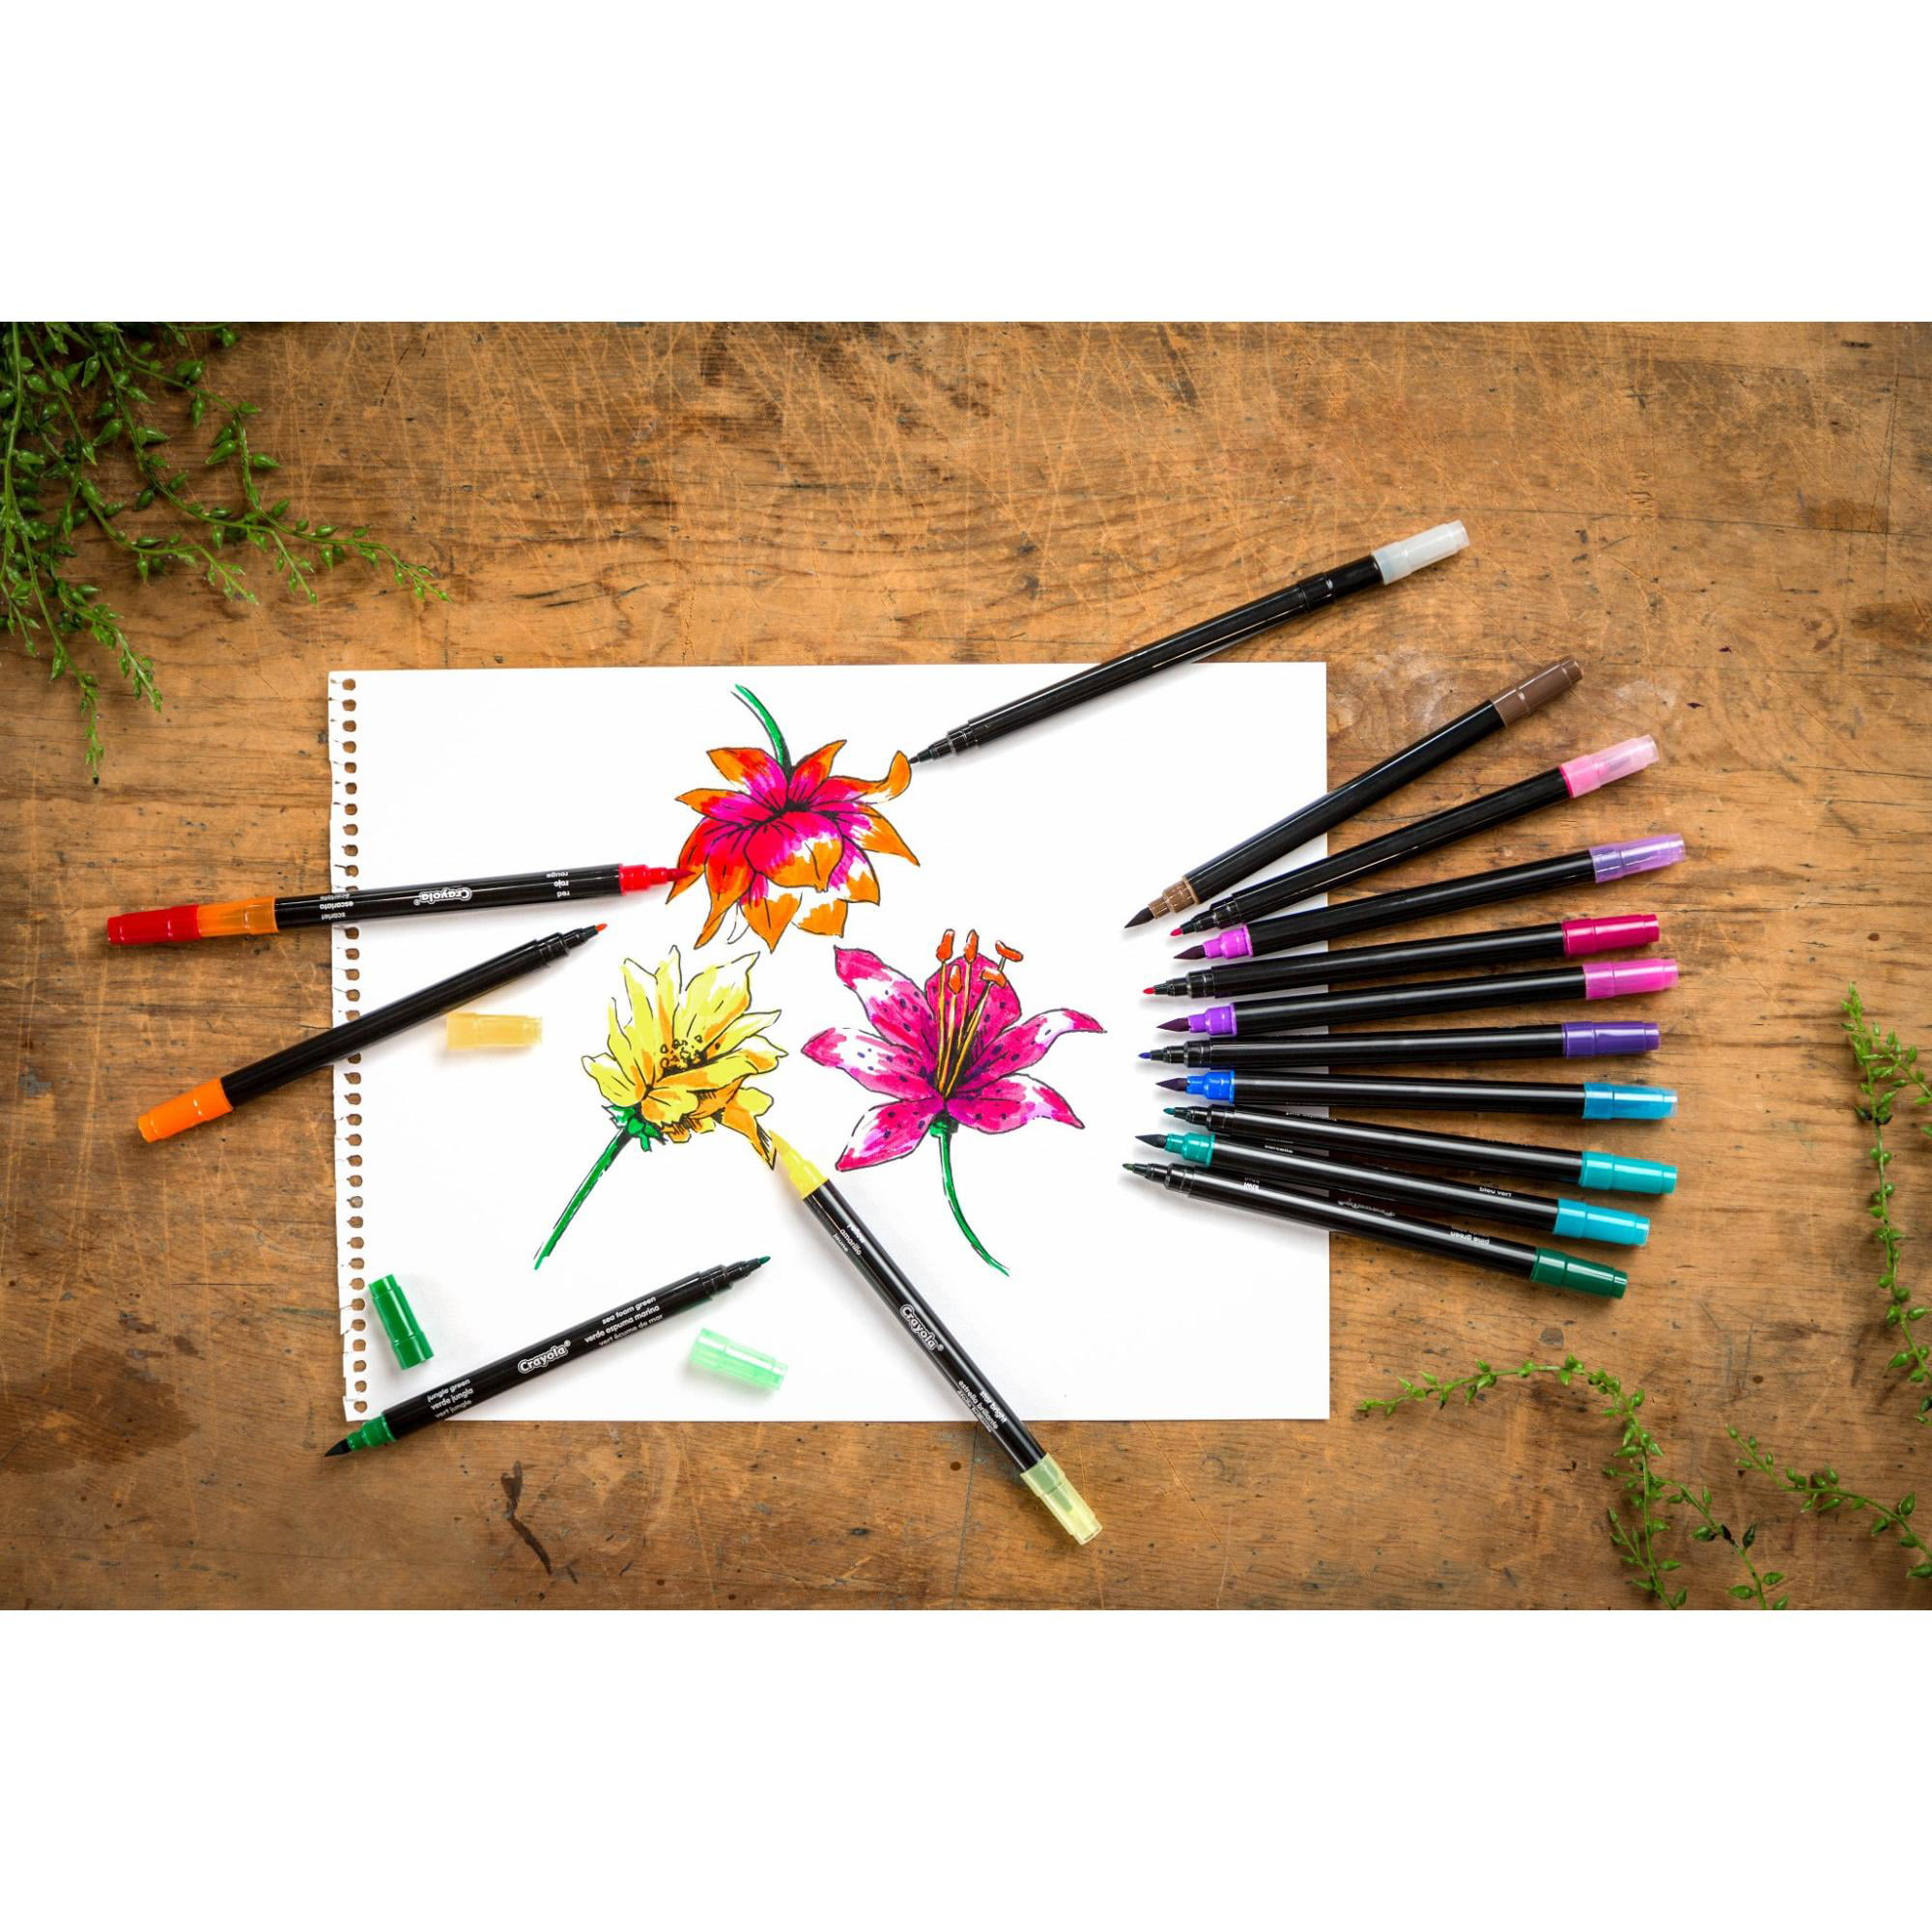 Crayola Signature Brush and Detail Dual-Tip Markers, 16 pk - QFC